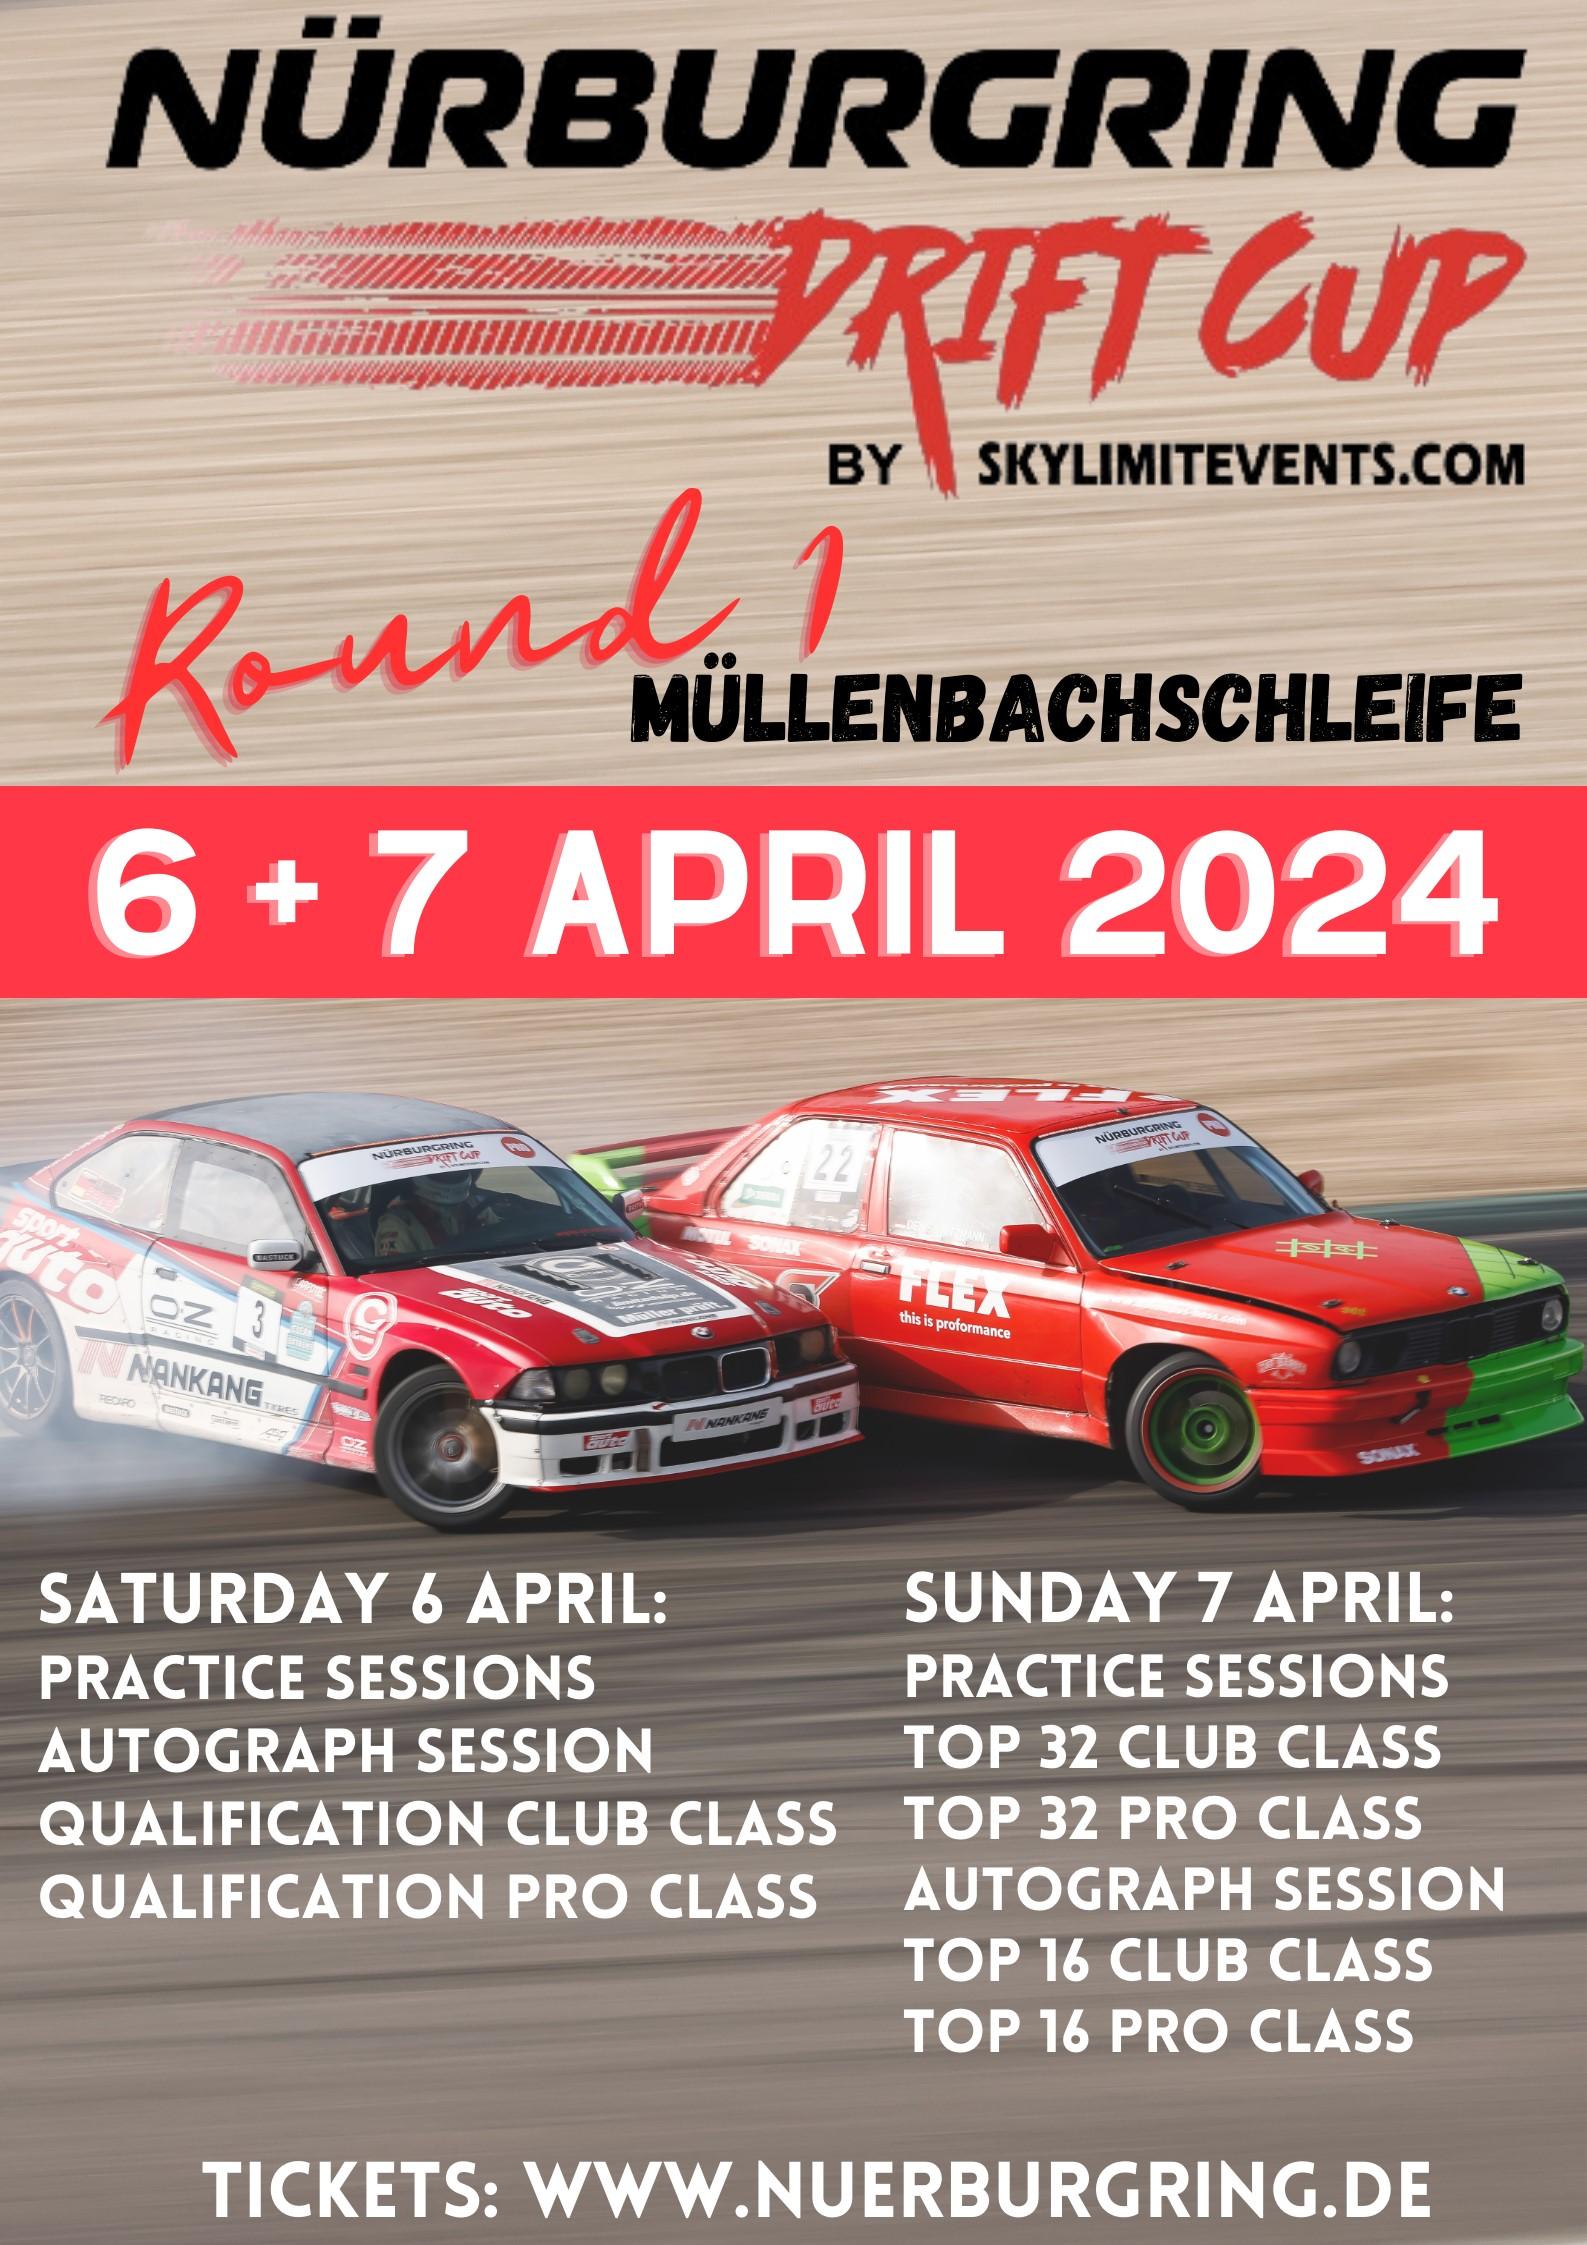 Plakat, @ Nürburgring 1927 GmbH & Co. KG